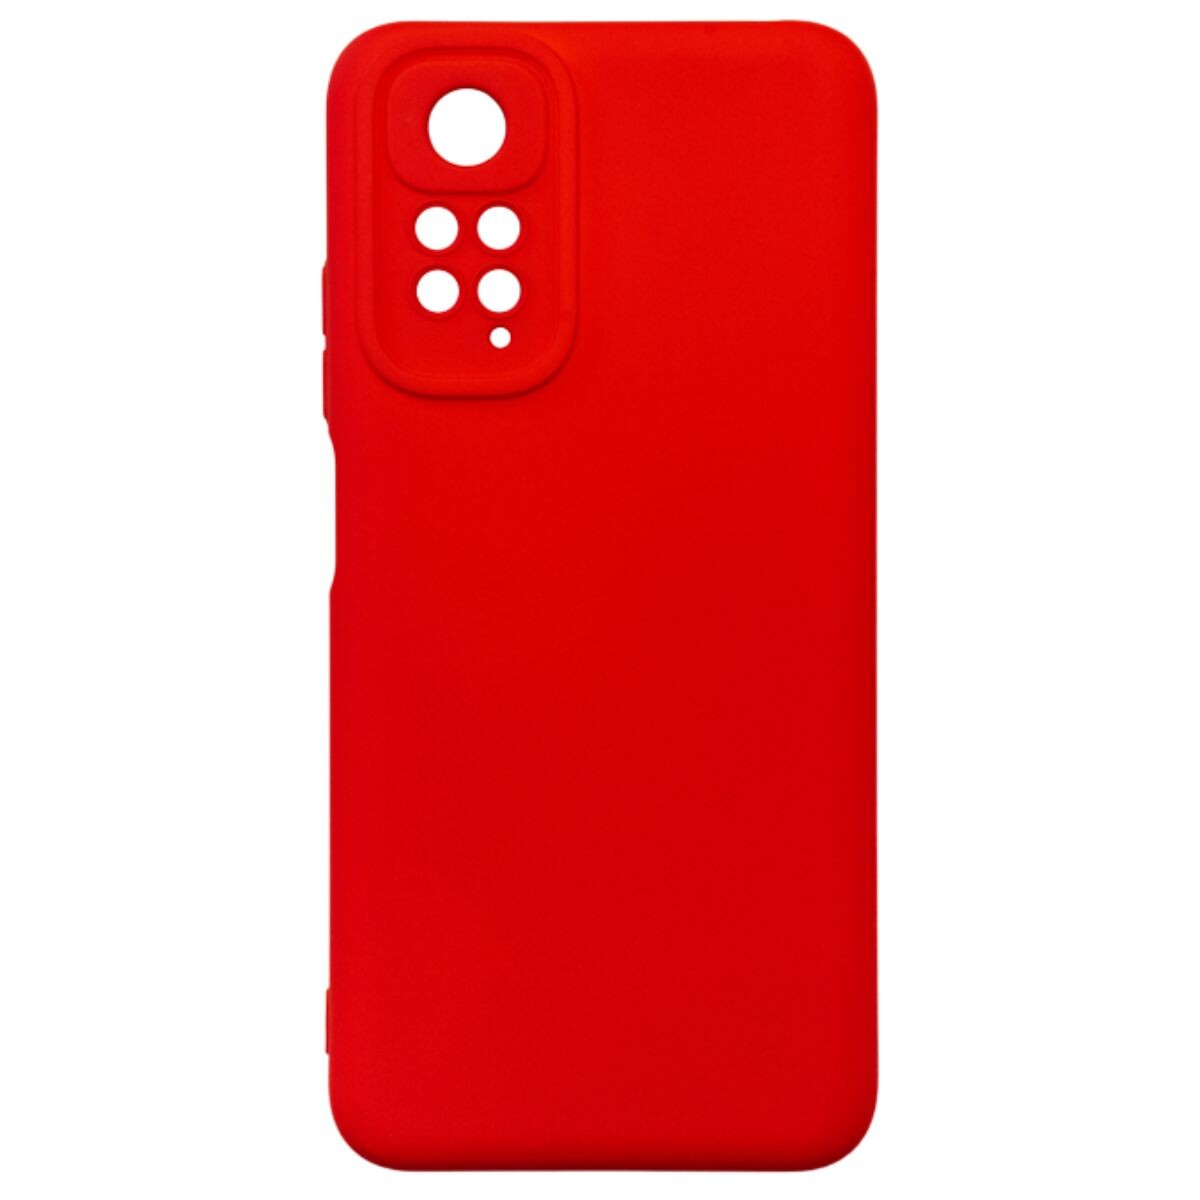 Protector liso Xiaomi Redmi A2 rojo 